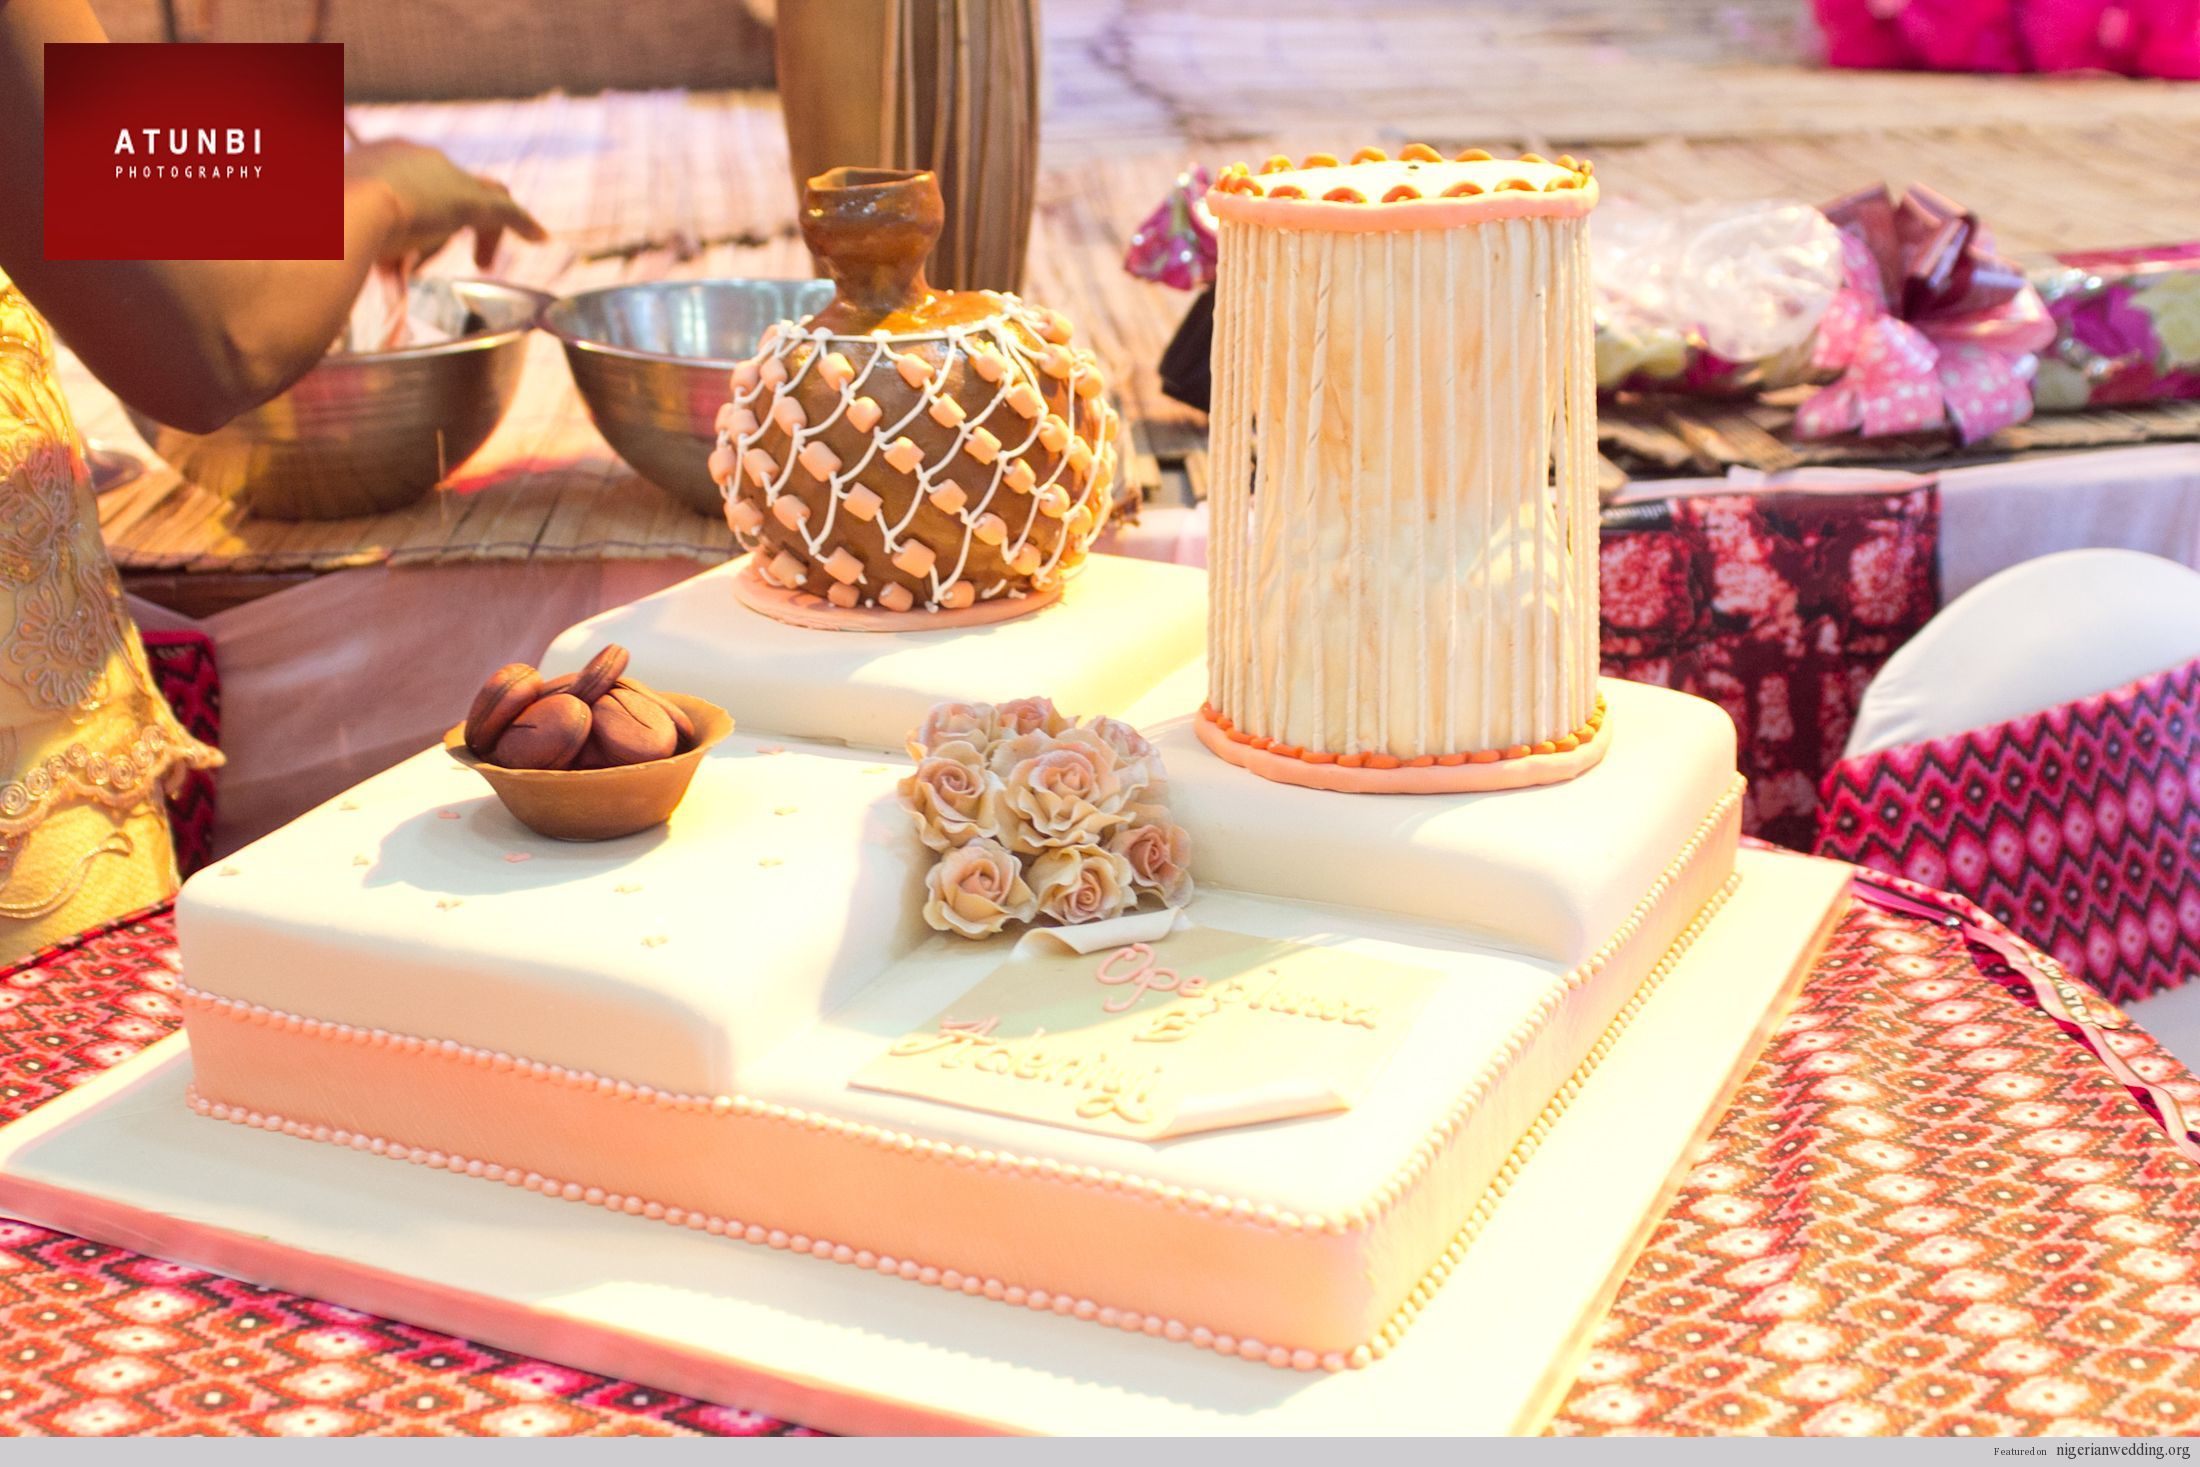 James Ibori Traditional wedding cake